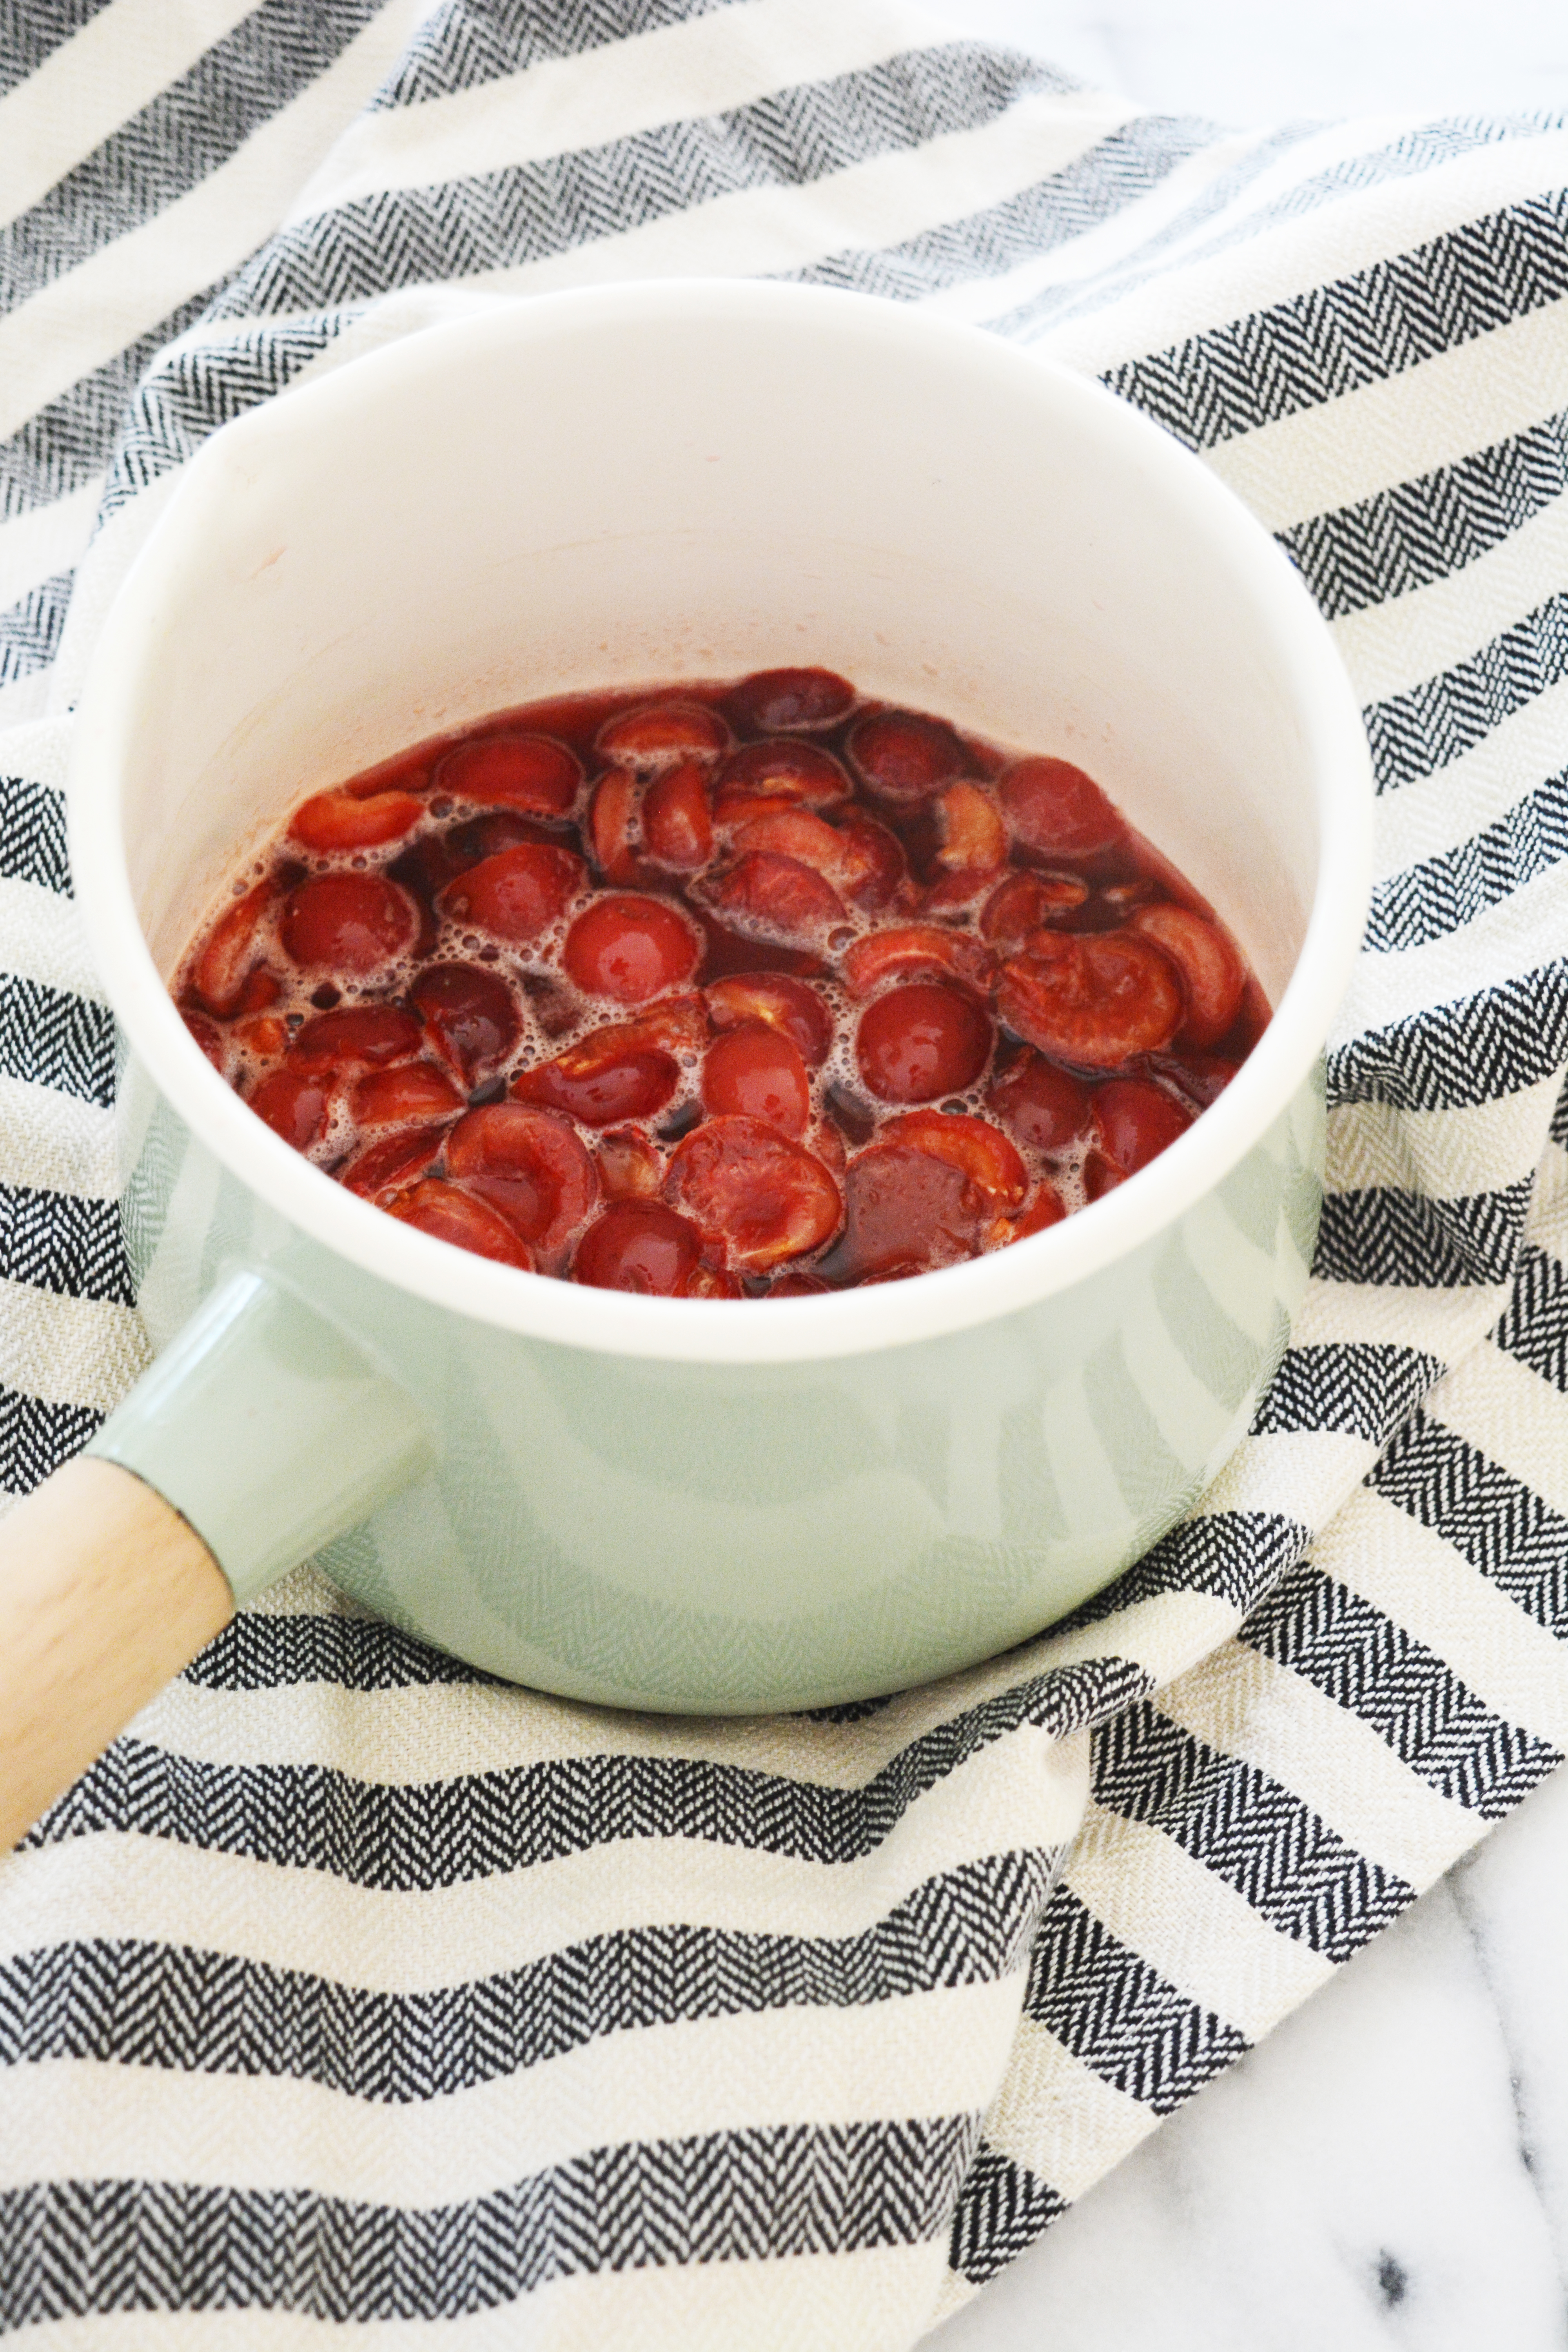 Cherry Limeade recipe - a healthier take on a drive-thru classic.